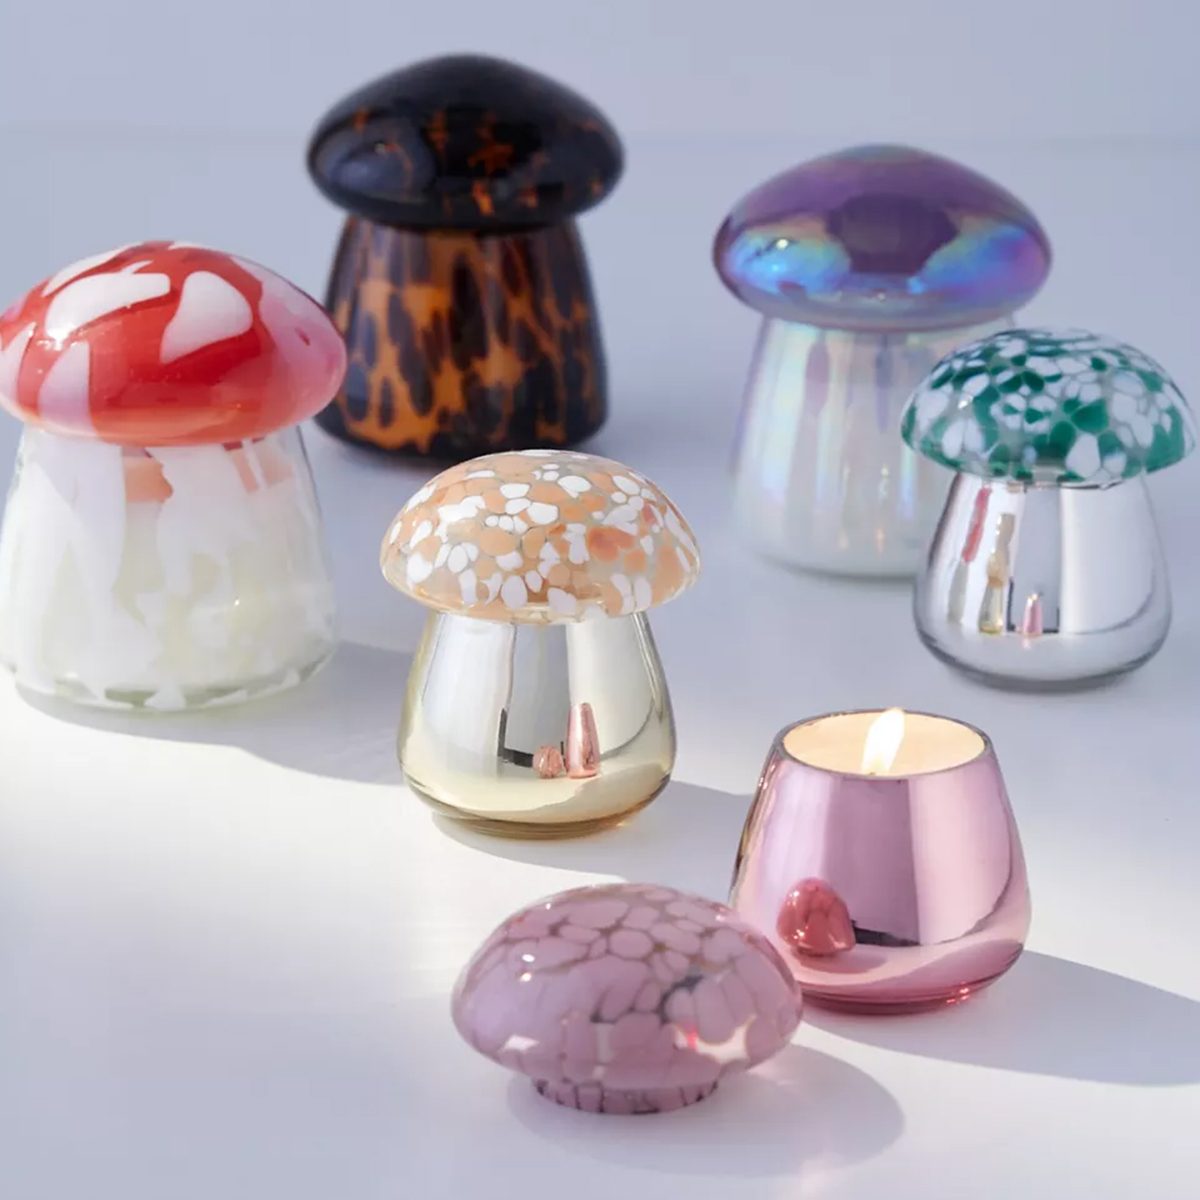 Anthropologie's Viral TikTok Mushroom Candle Is on Sale